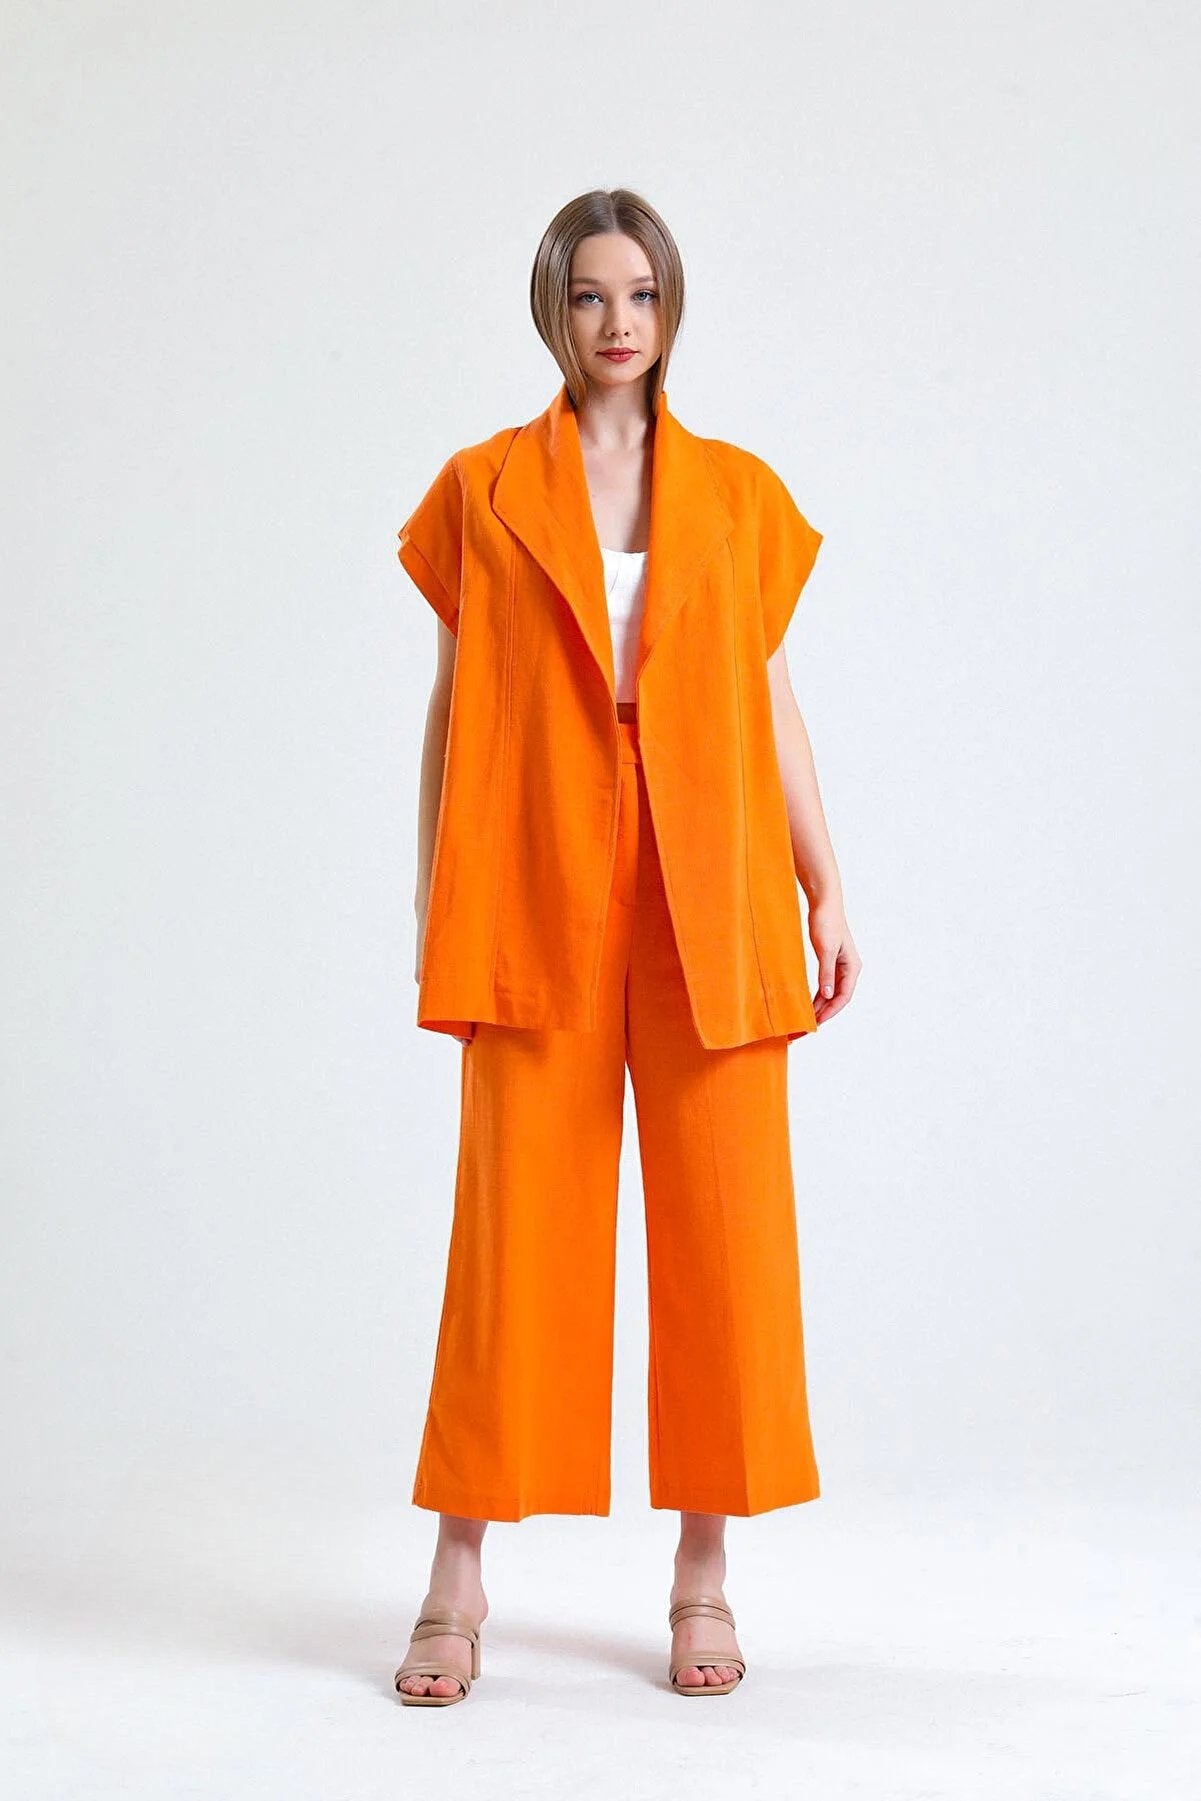 100% Organic Linen Fabric Coat with Belt - Orange - Jacket - LussoCA